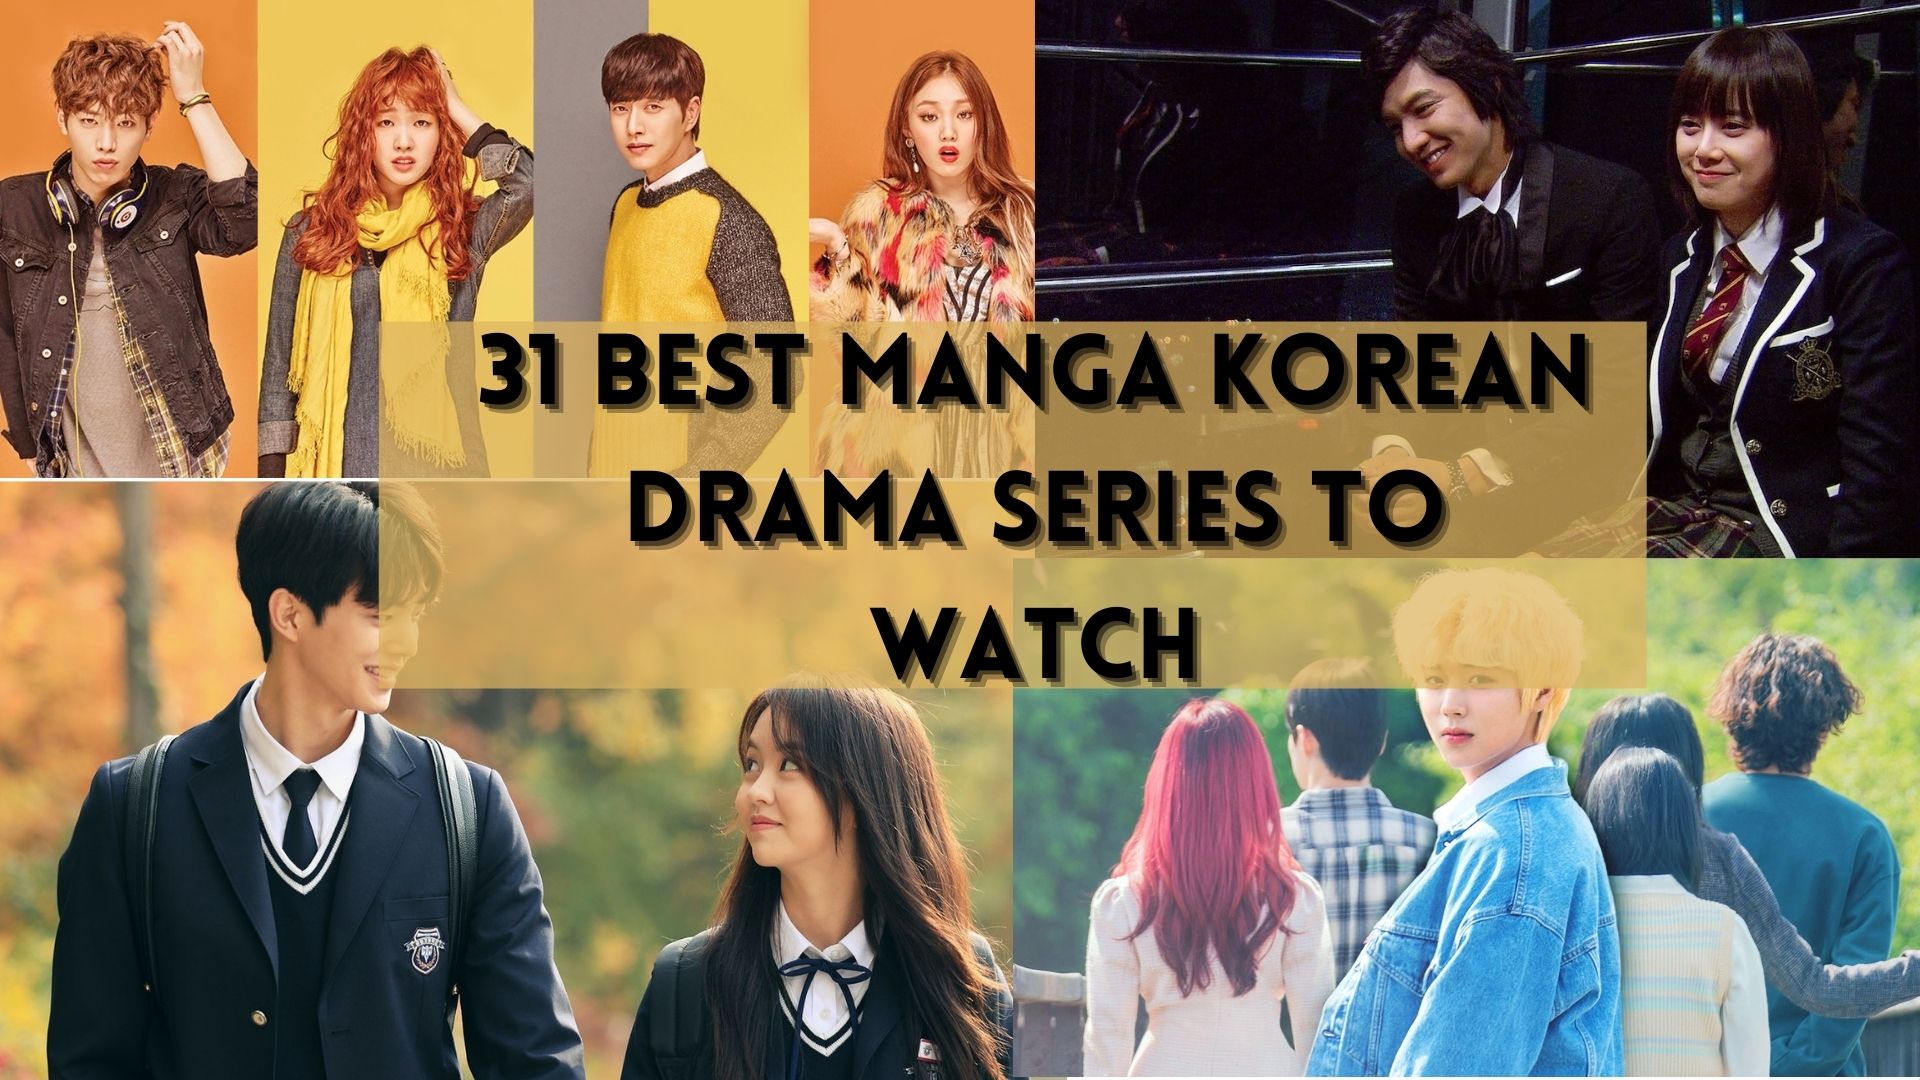 31 Best Manga Korean Drama Series to Watch